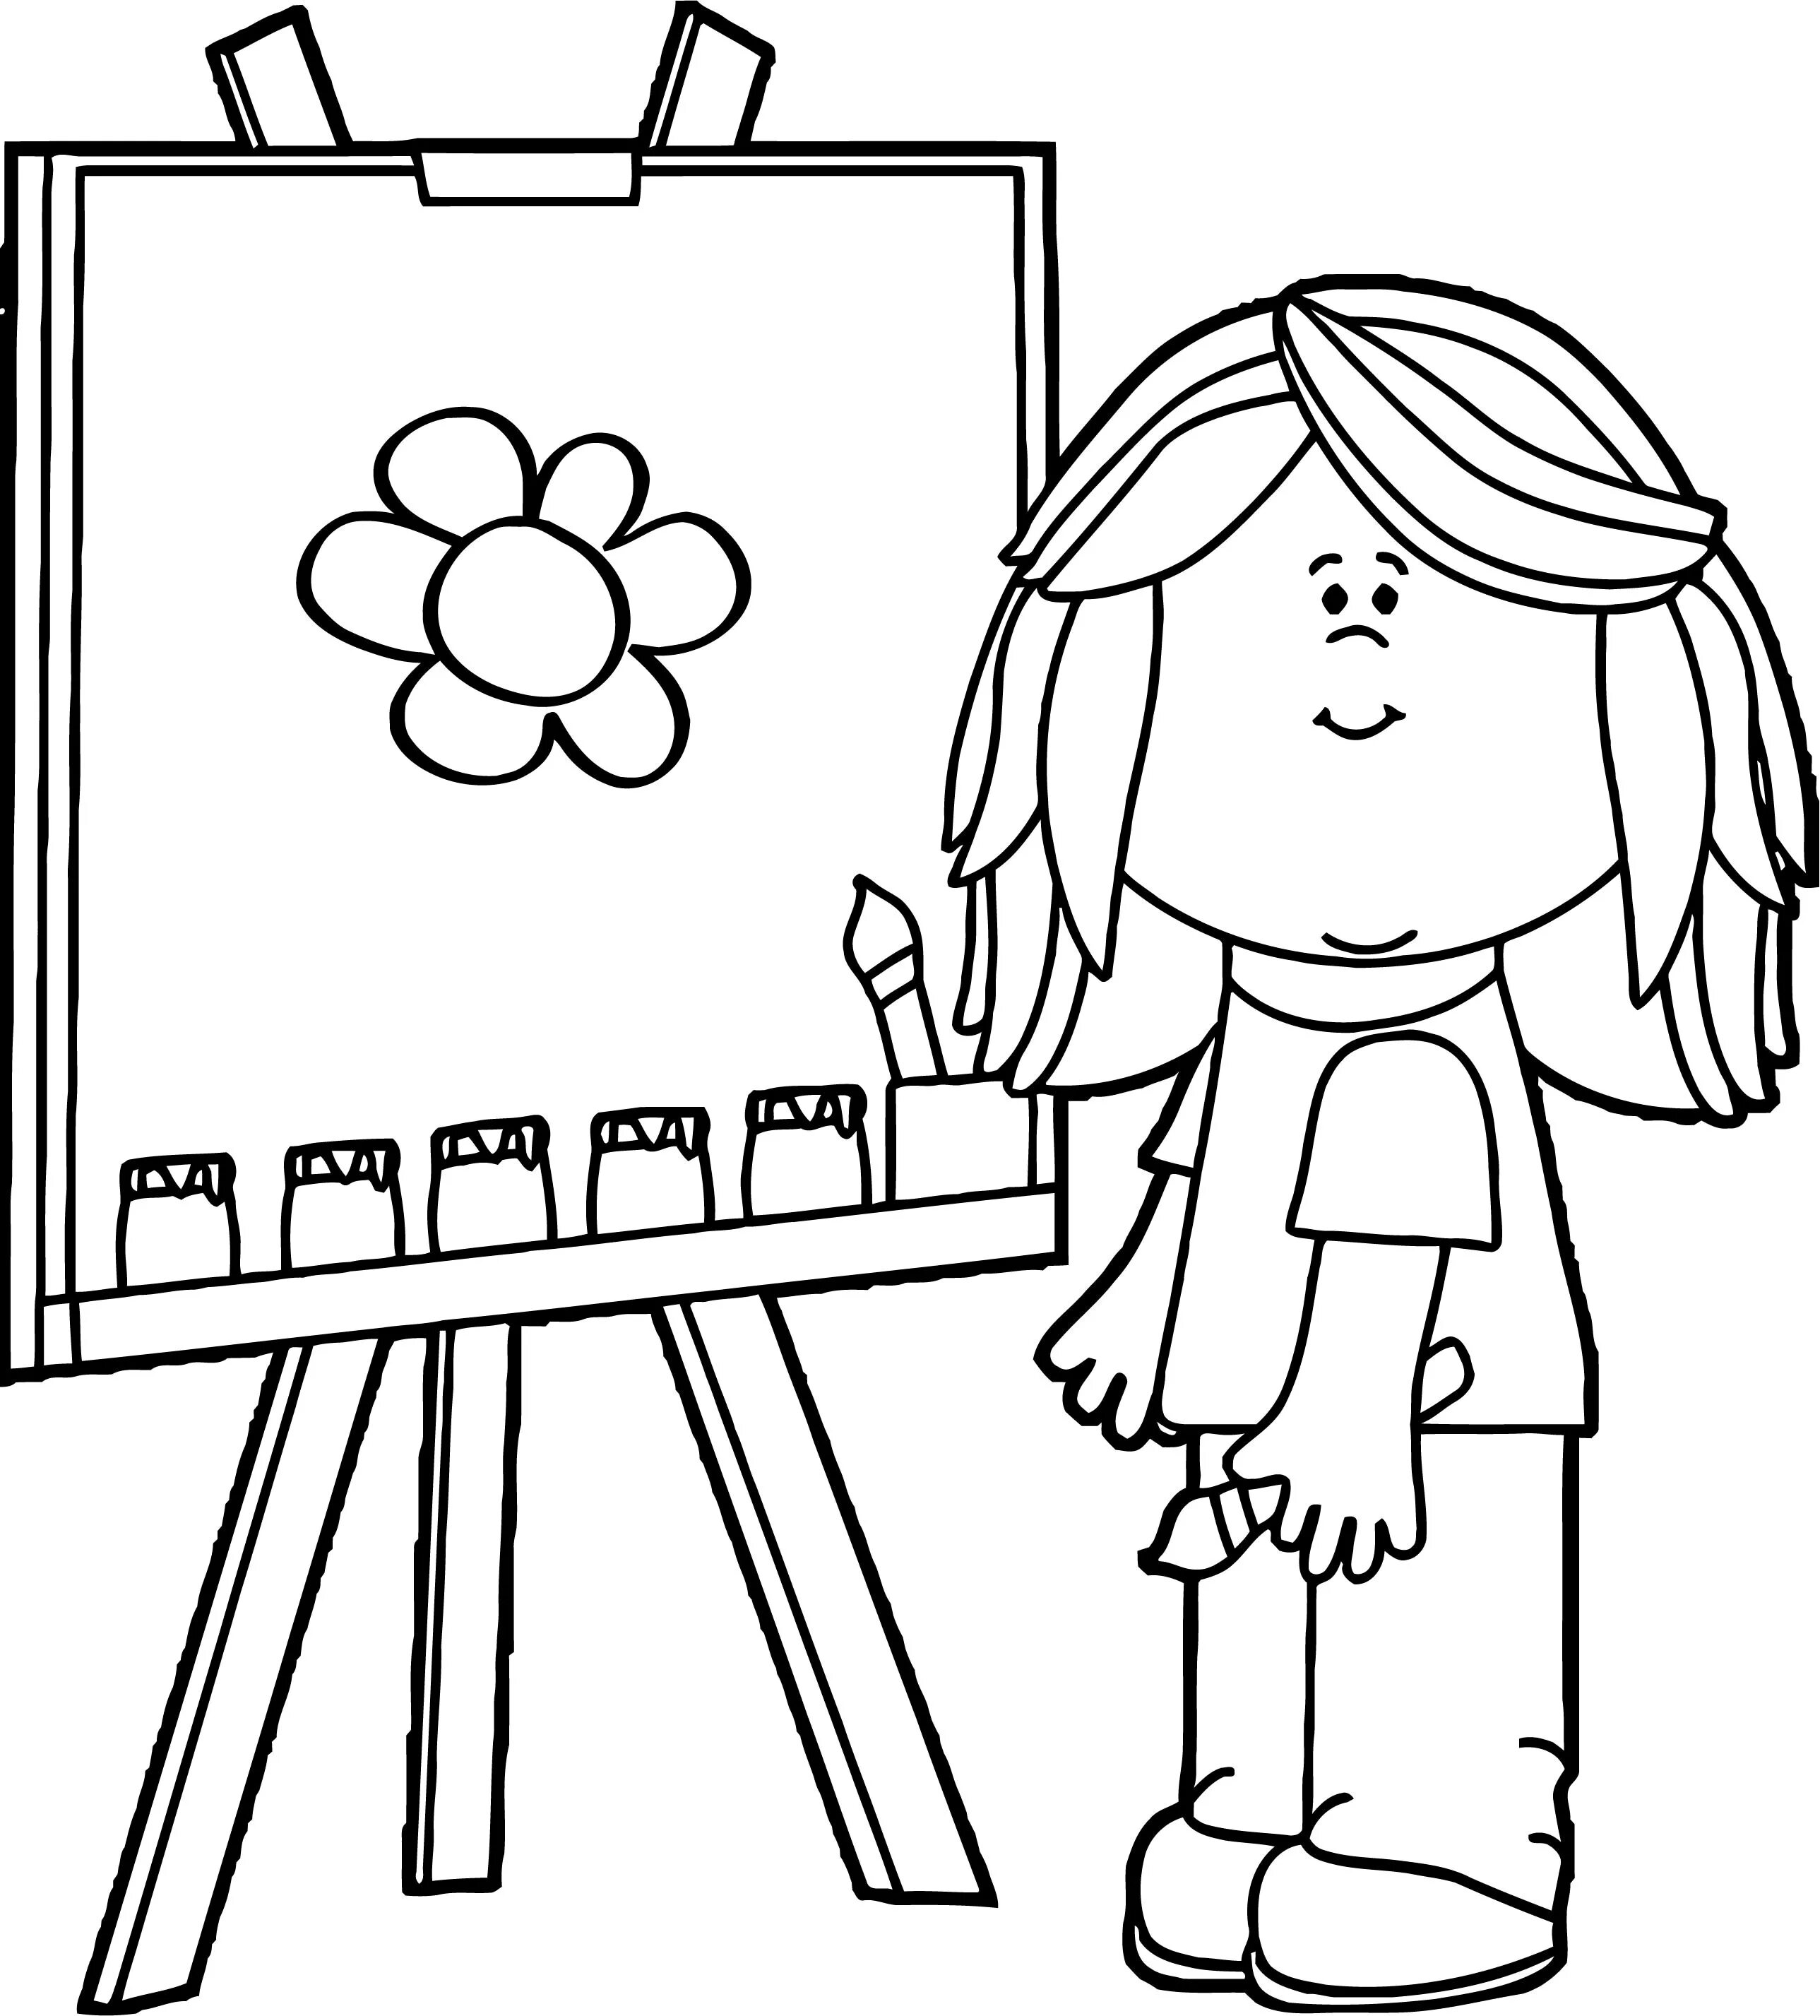 Creative coloring book for preschoolers